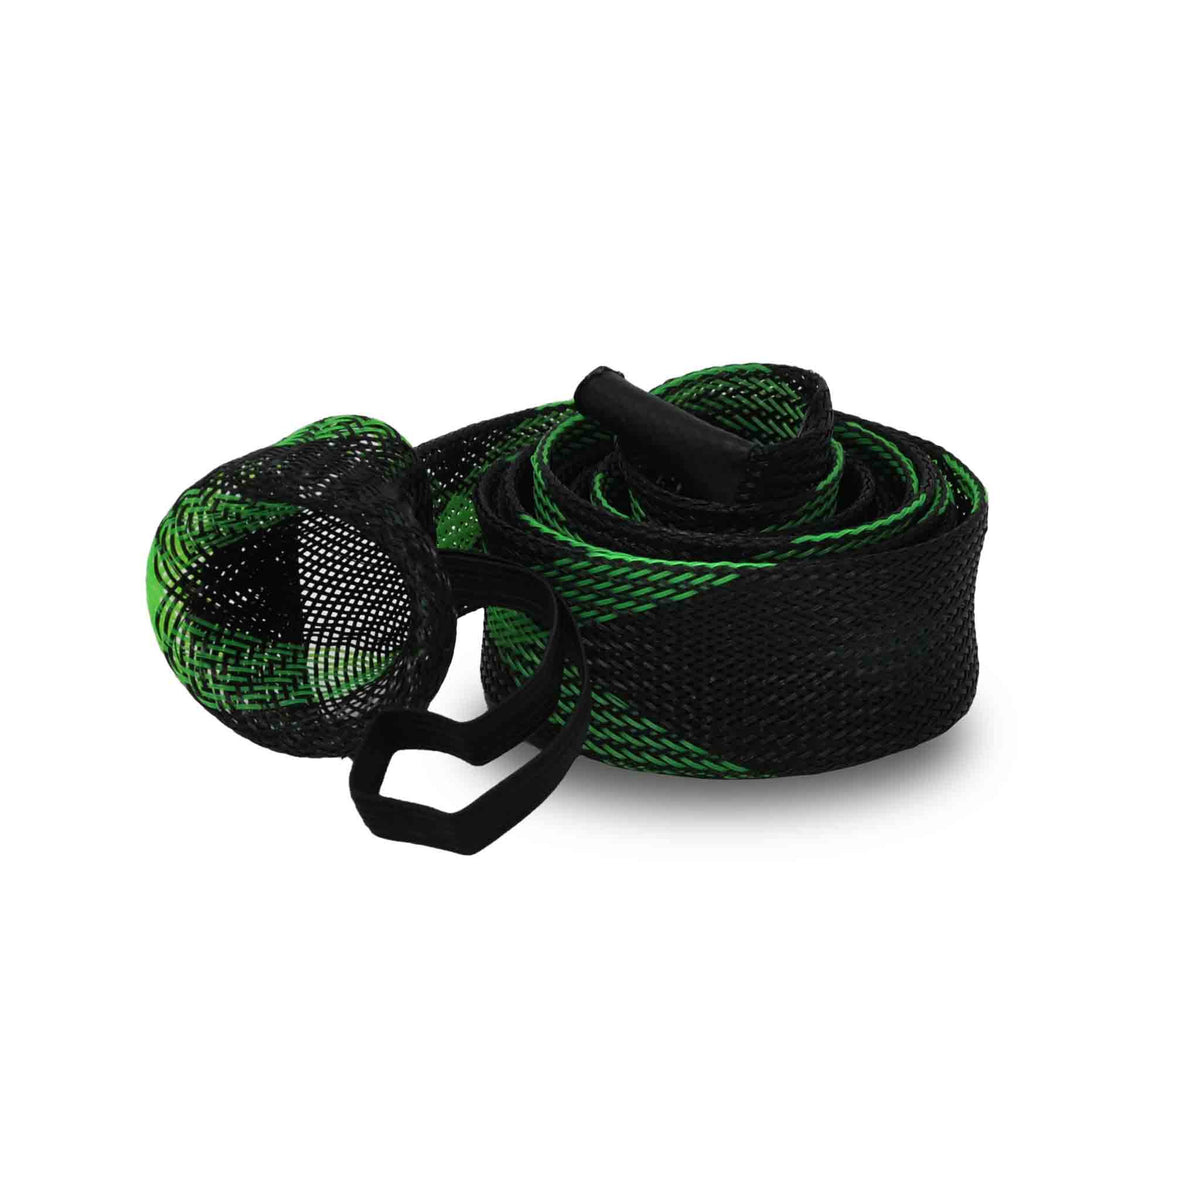 Ezoko Rod Sleeve Baitcast & Fly Fishing 5'7" Black / Green Rods-Reels-Accessories